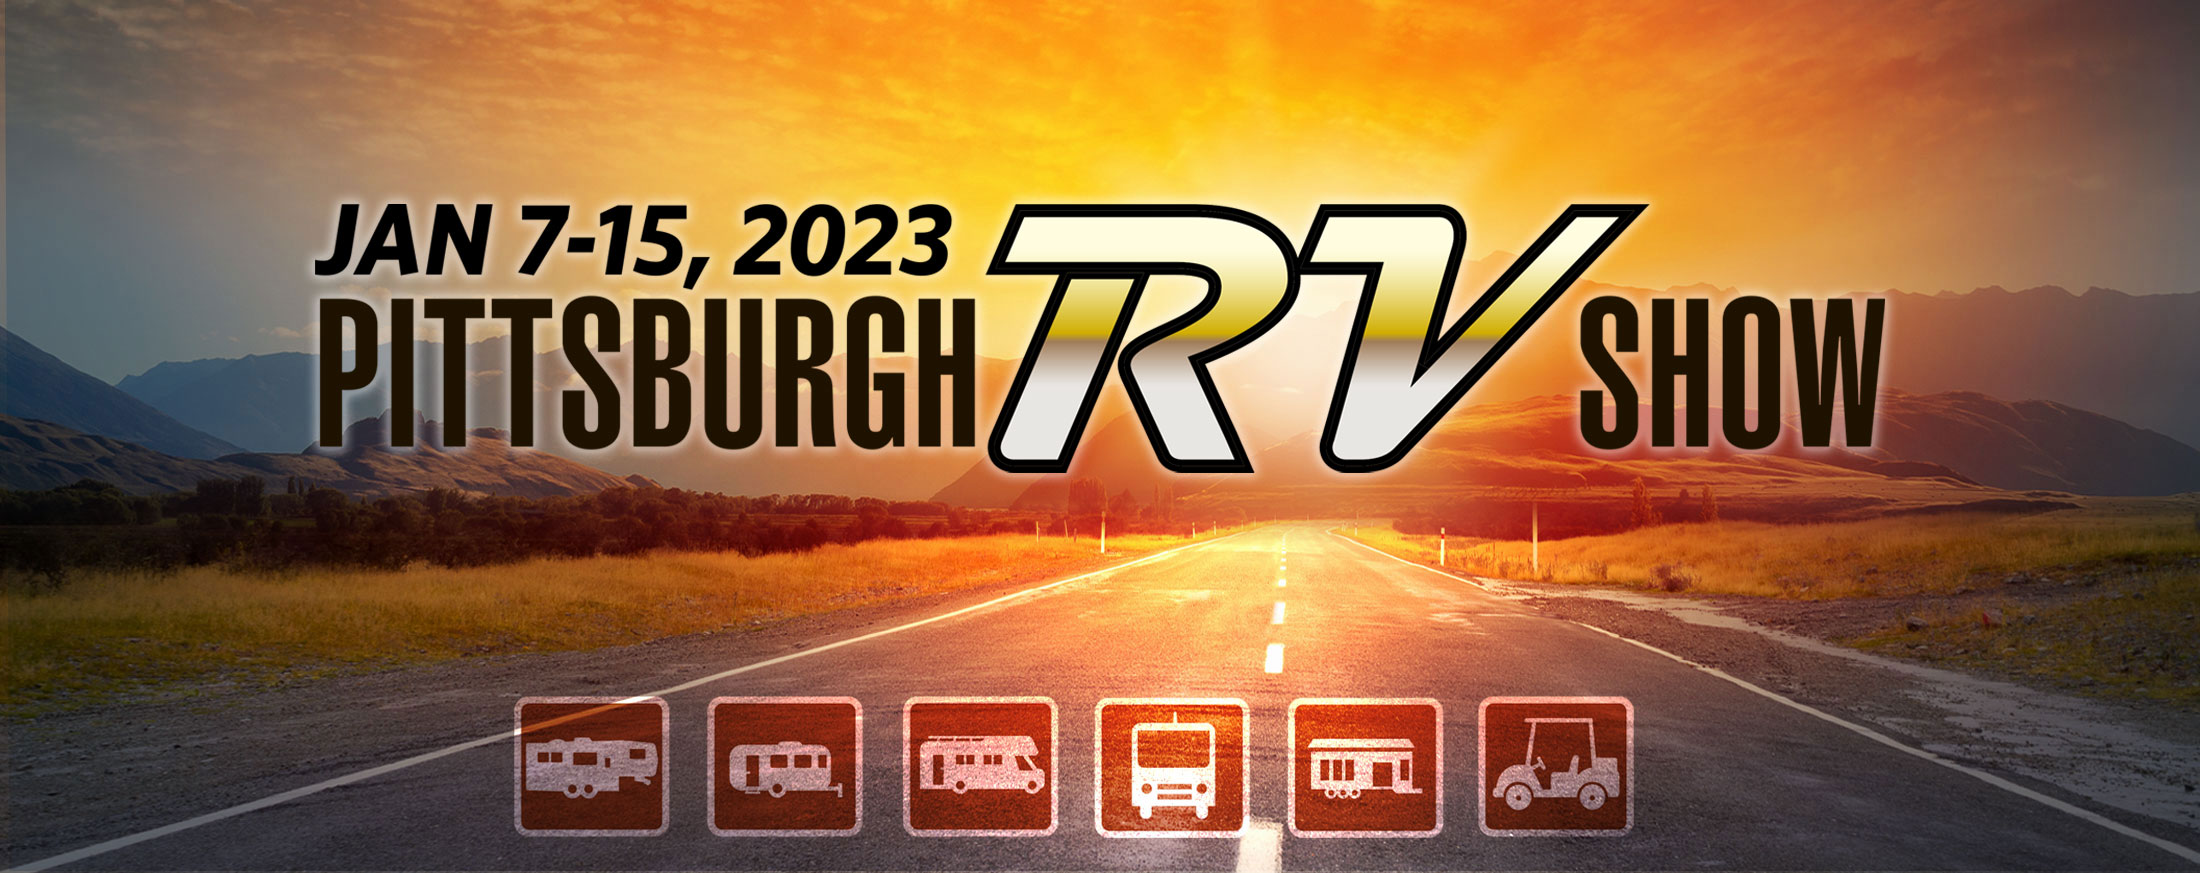 2023 Pittsburgh RV Show